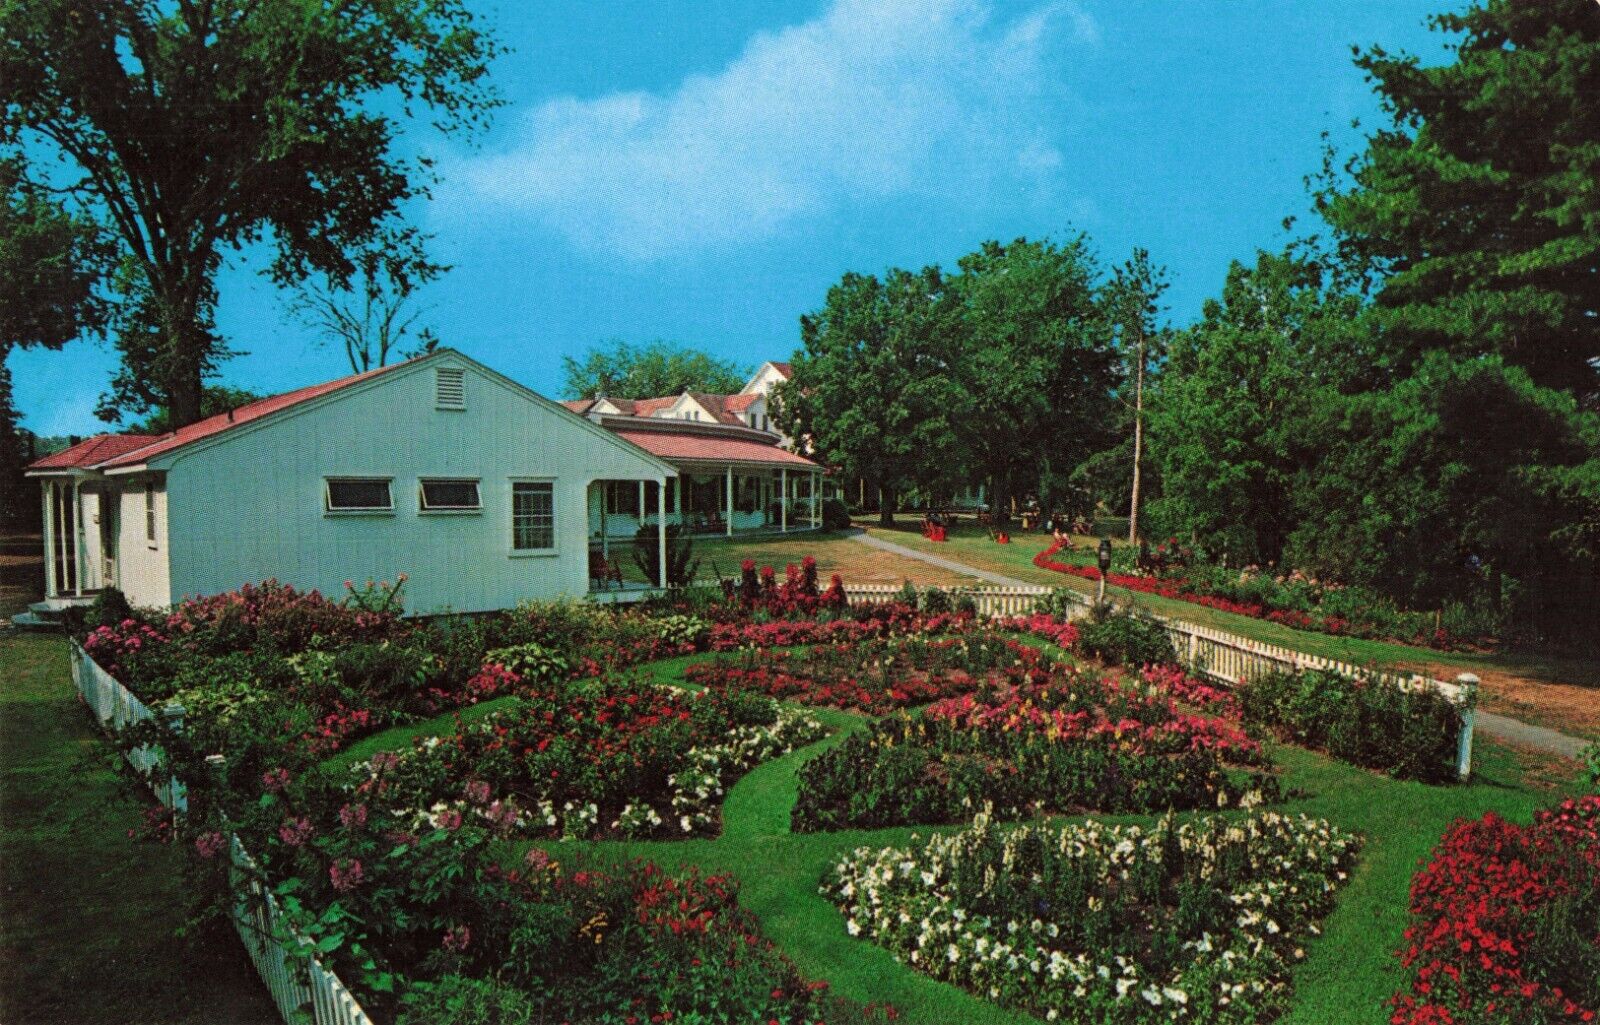 Basin Harbor Club on Lake Champlain, Vergennes, Vermont Postcard